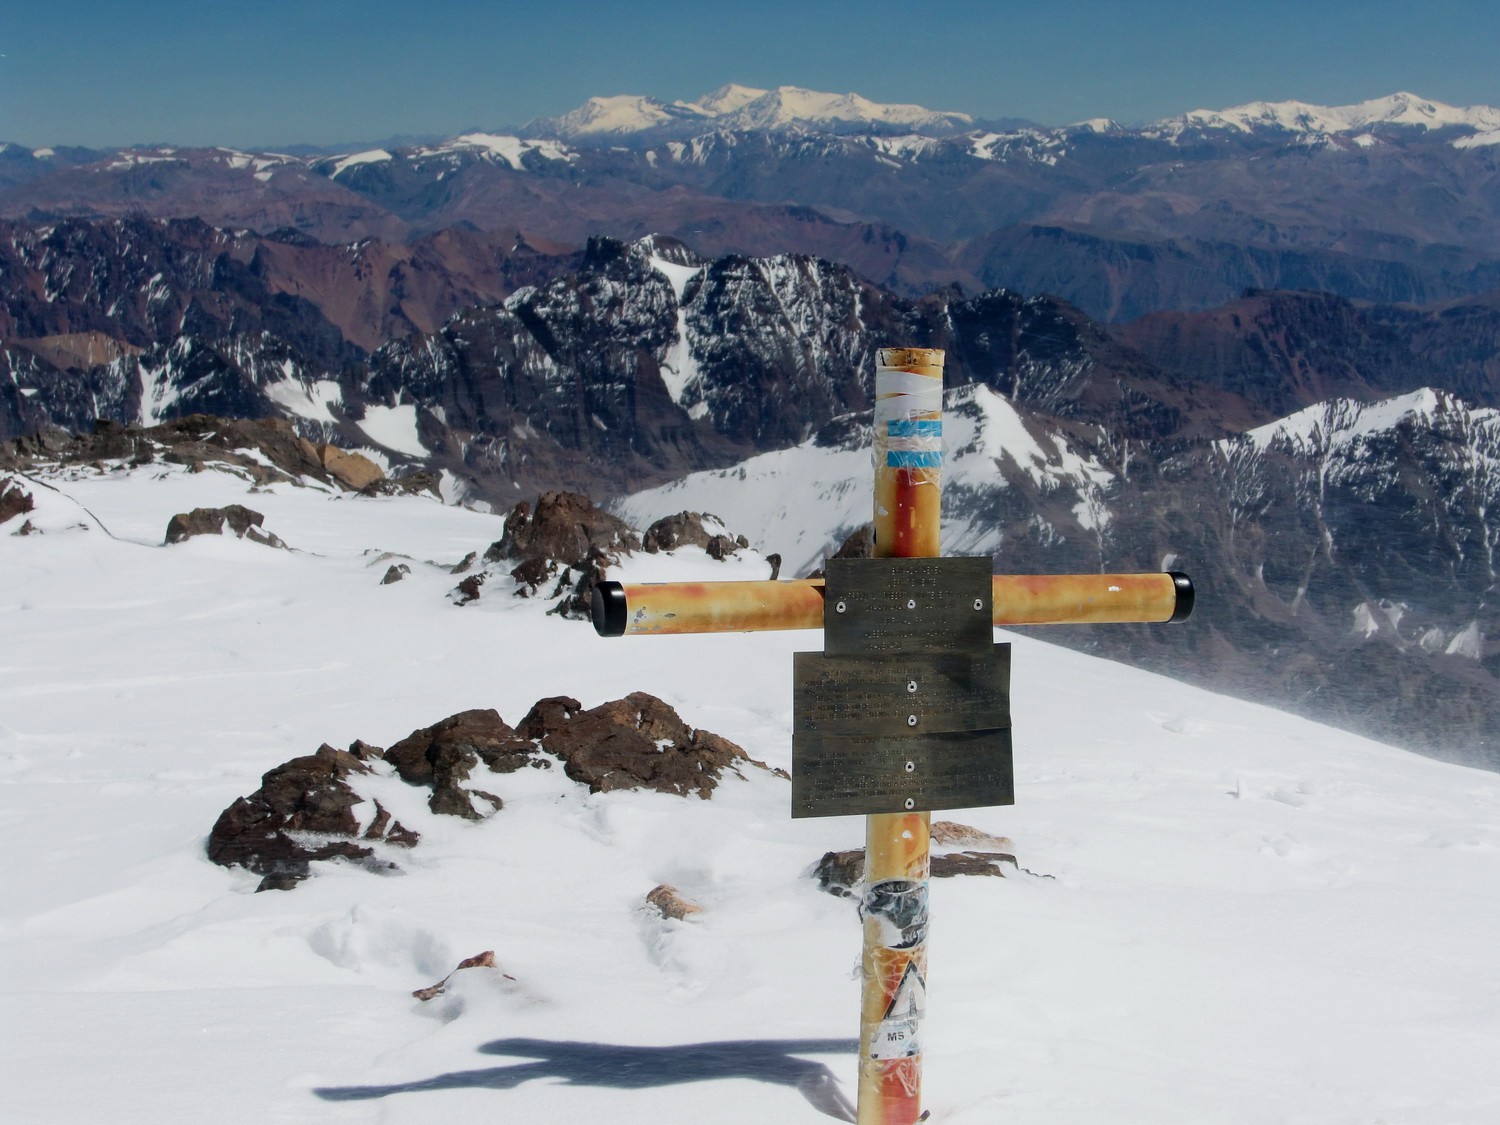 Another cross on the summit of the Cerro Plata - Cerro Mercedario in the background